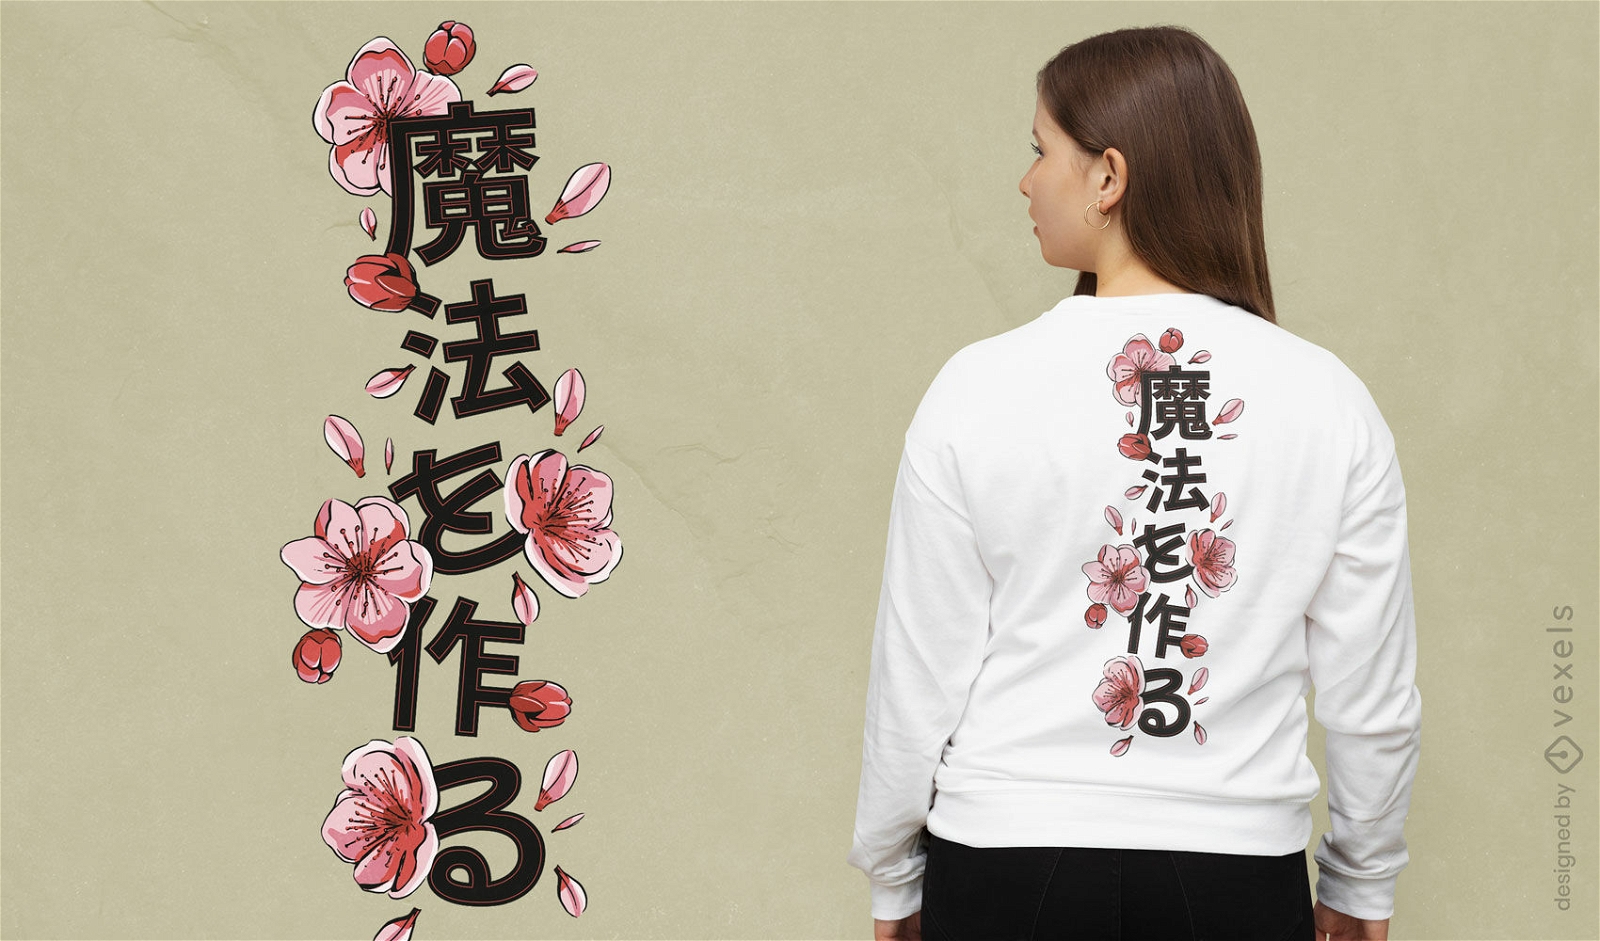 Florales japanisches Zitat-T-Shirt-Design